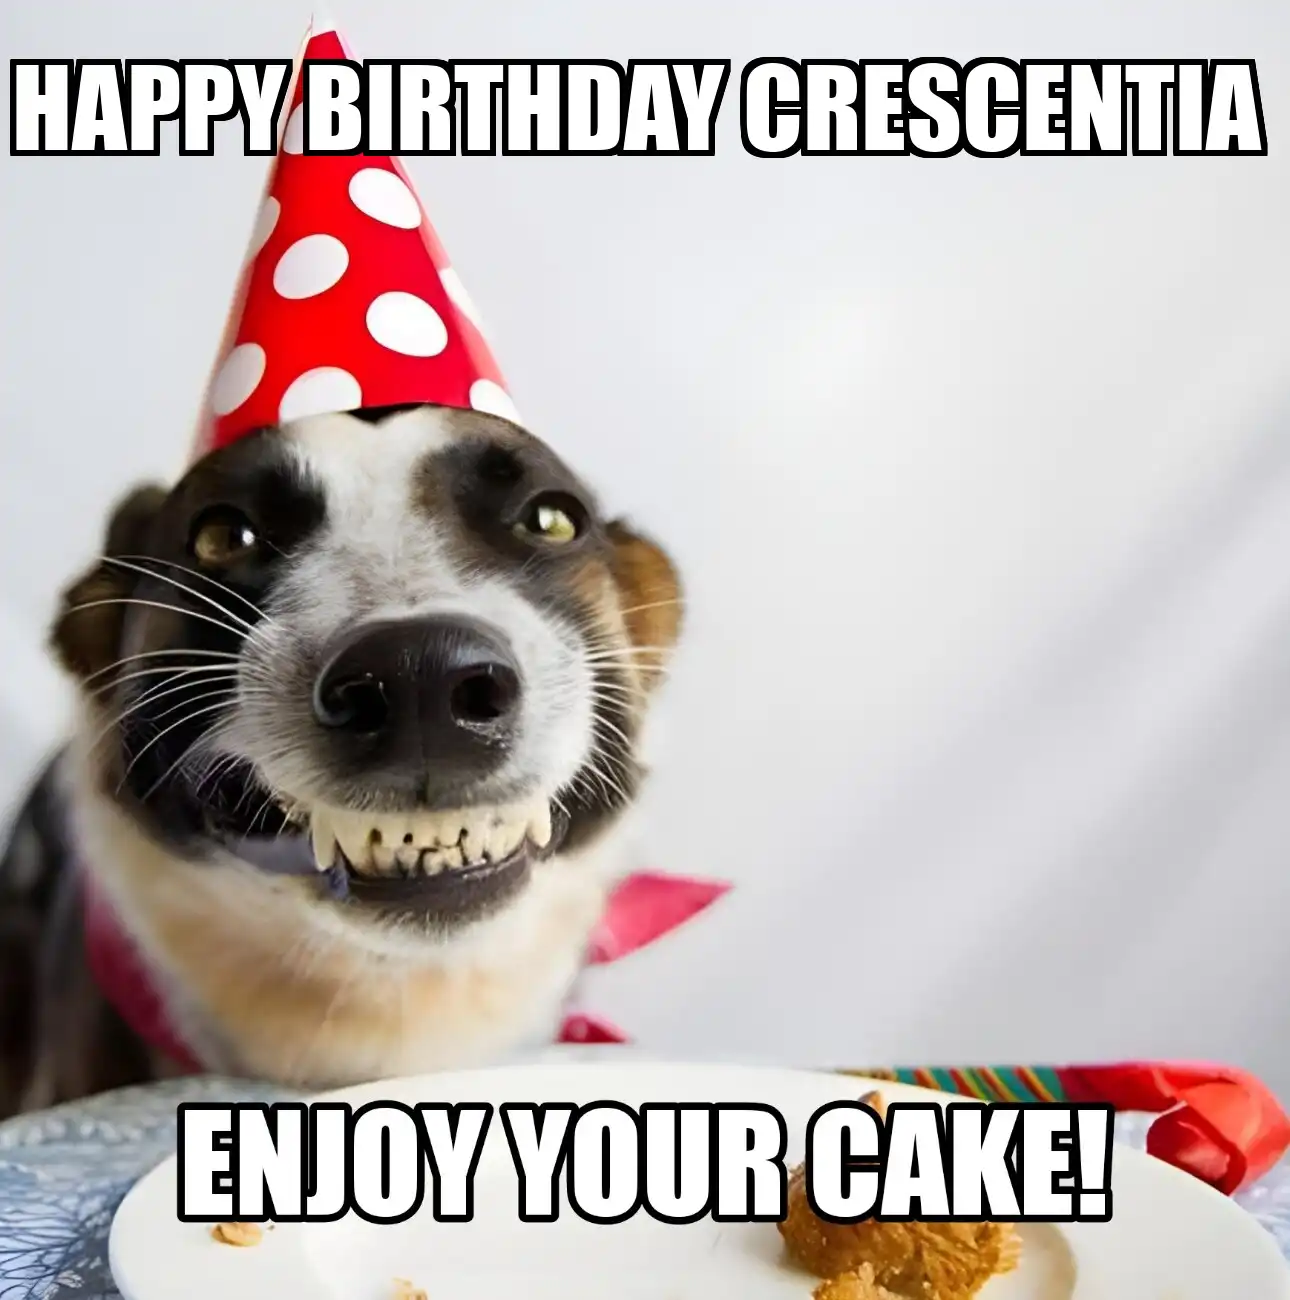 Happy Birthday Crescentia Enjoy Your Cake Dog Meme